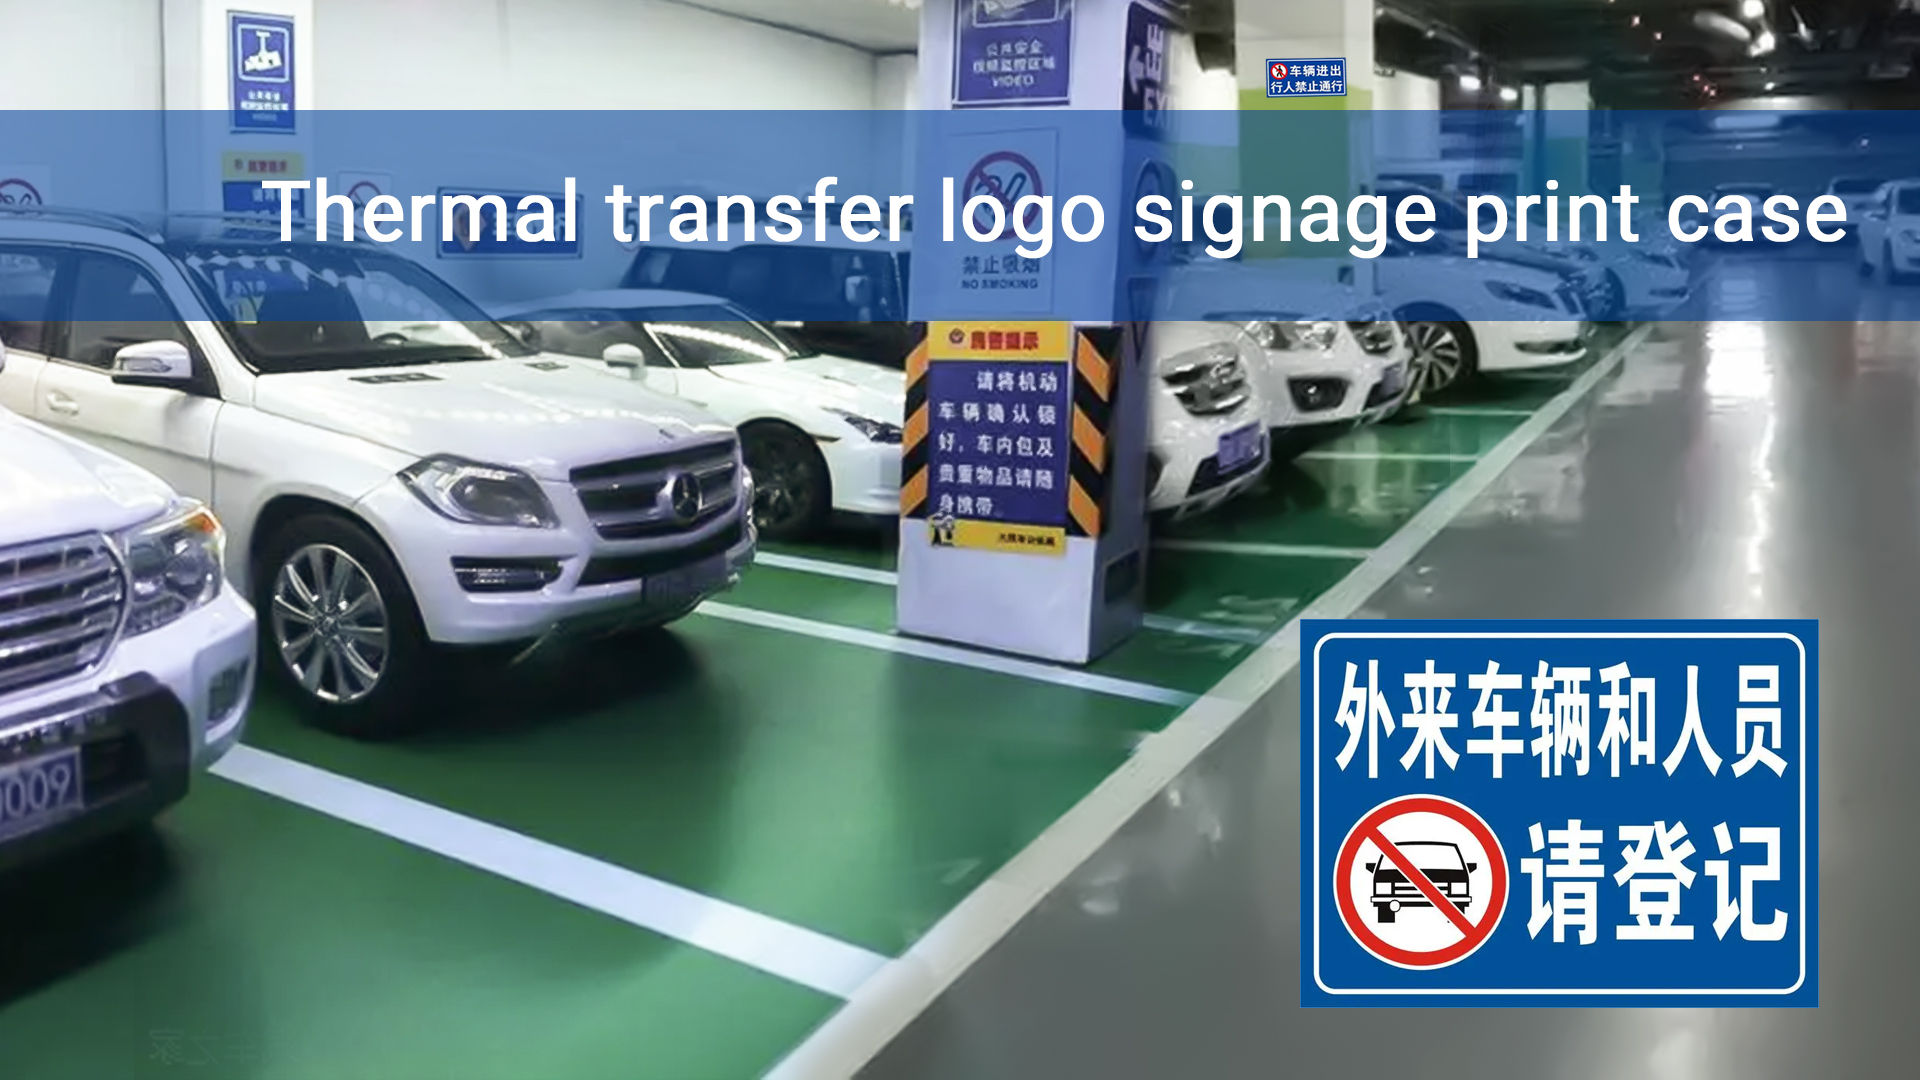 MASUNG custom parking lot thermal transfer logo solution